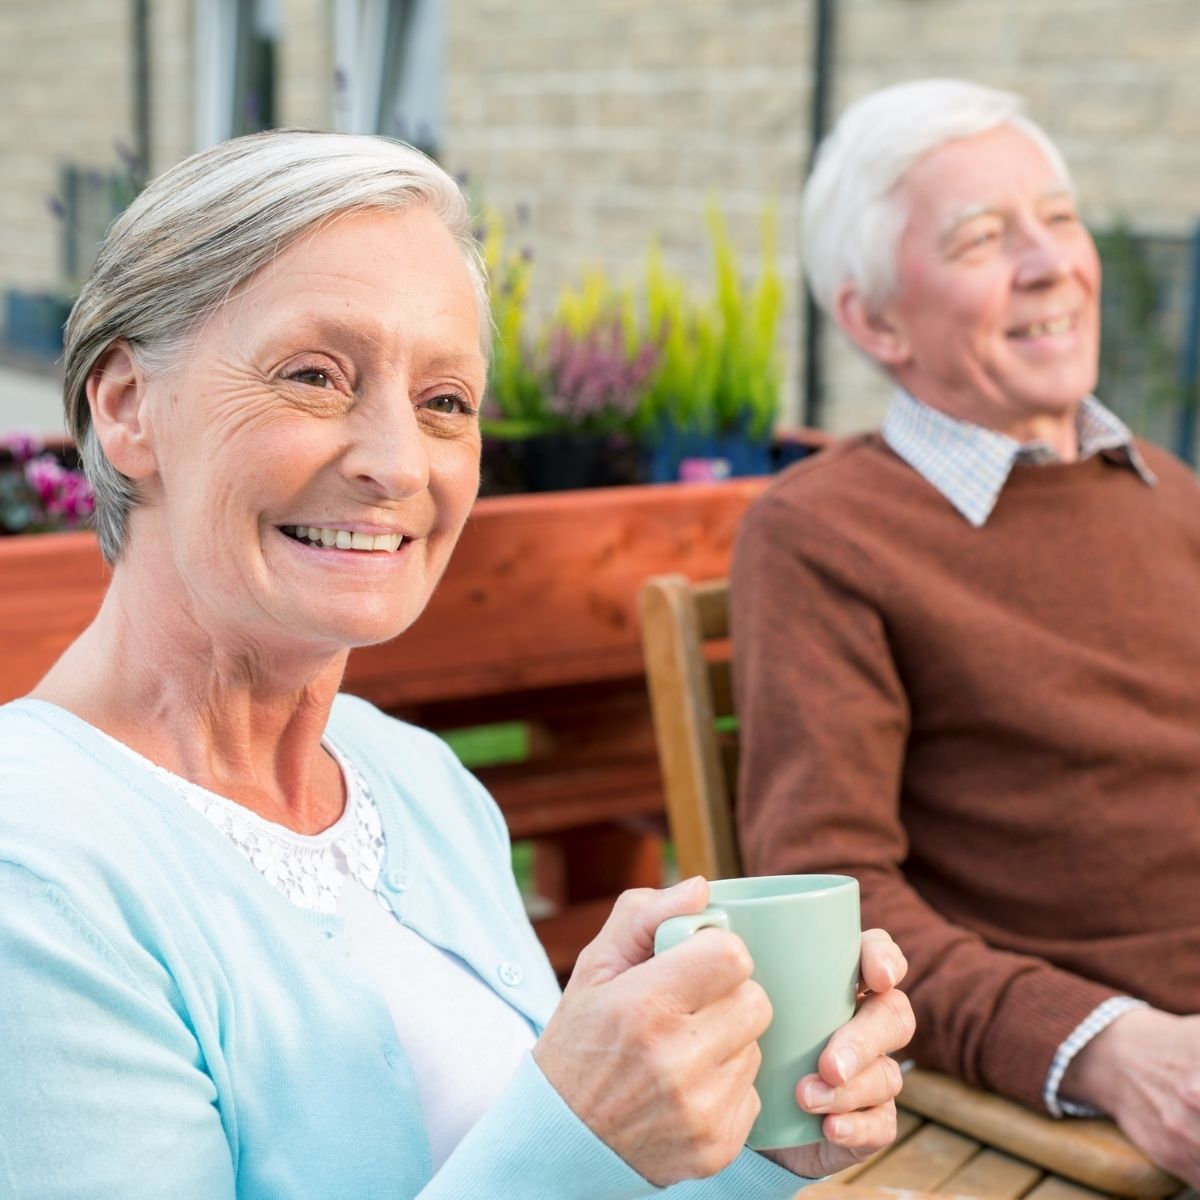 elderly people enjoying sitting outdoors in good weather